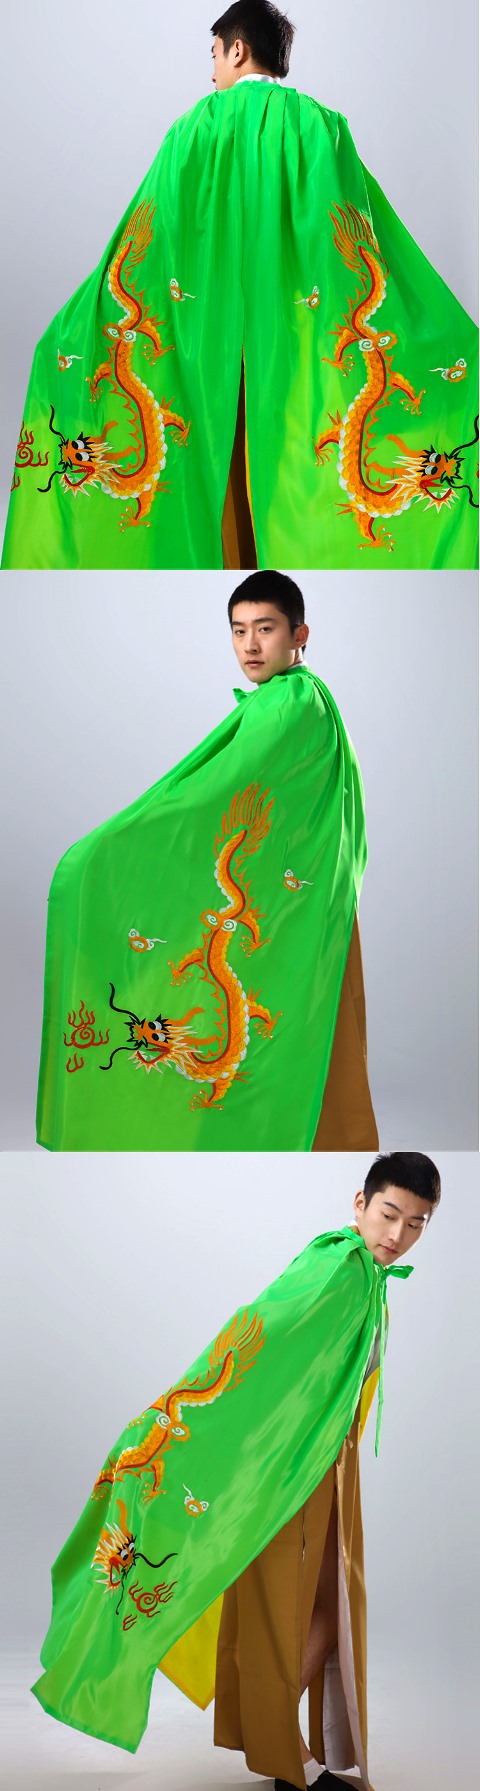 Men's Hanfu Dragon Embroidery Cloak - Green(RM)